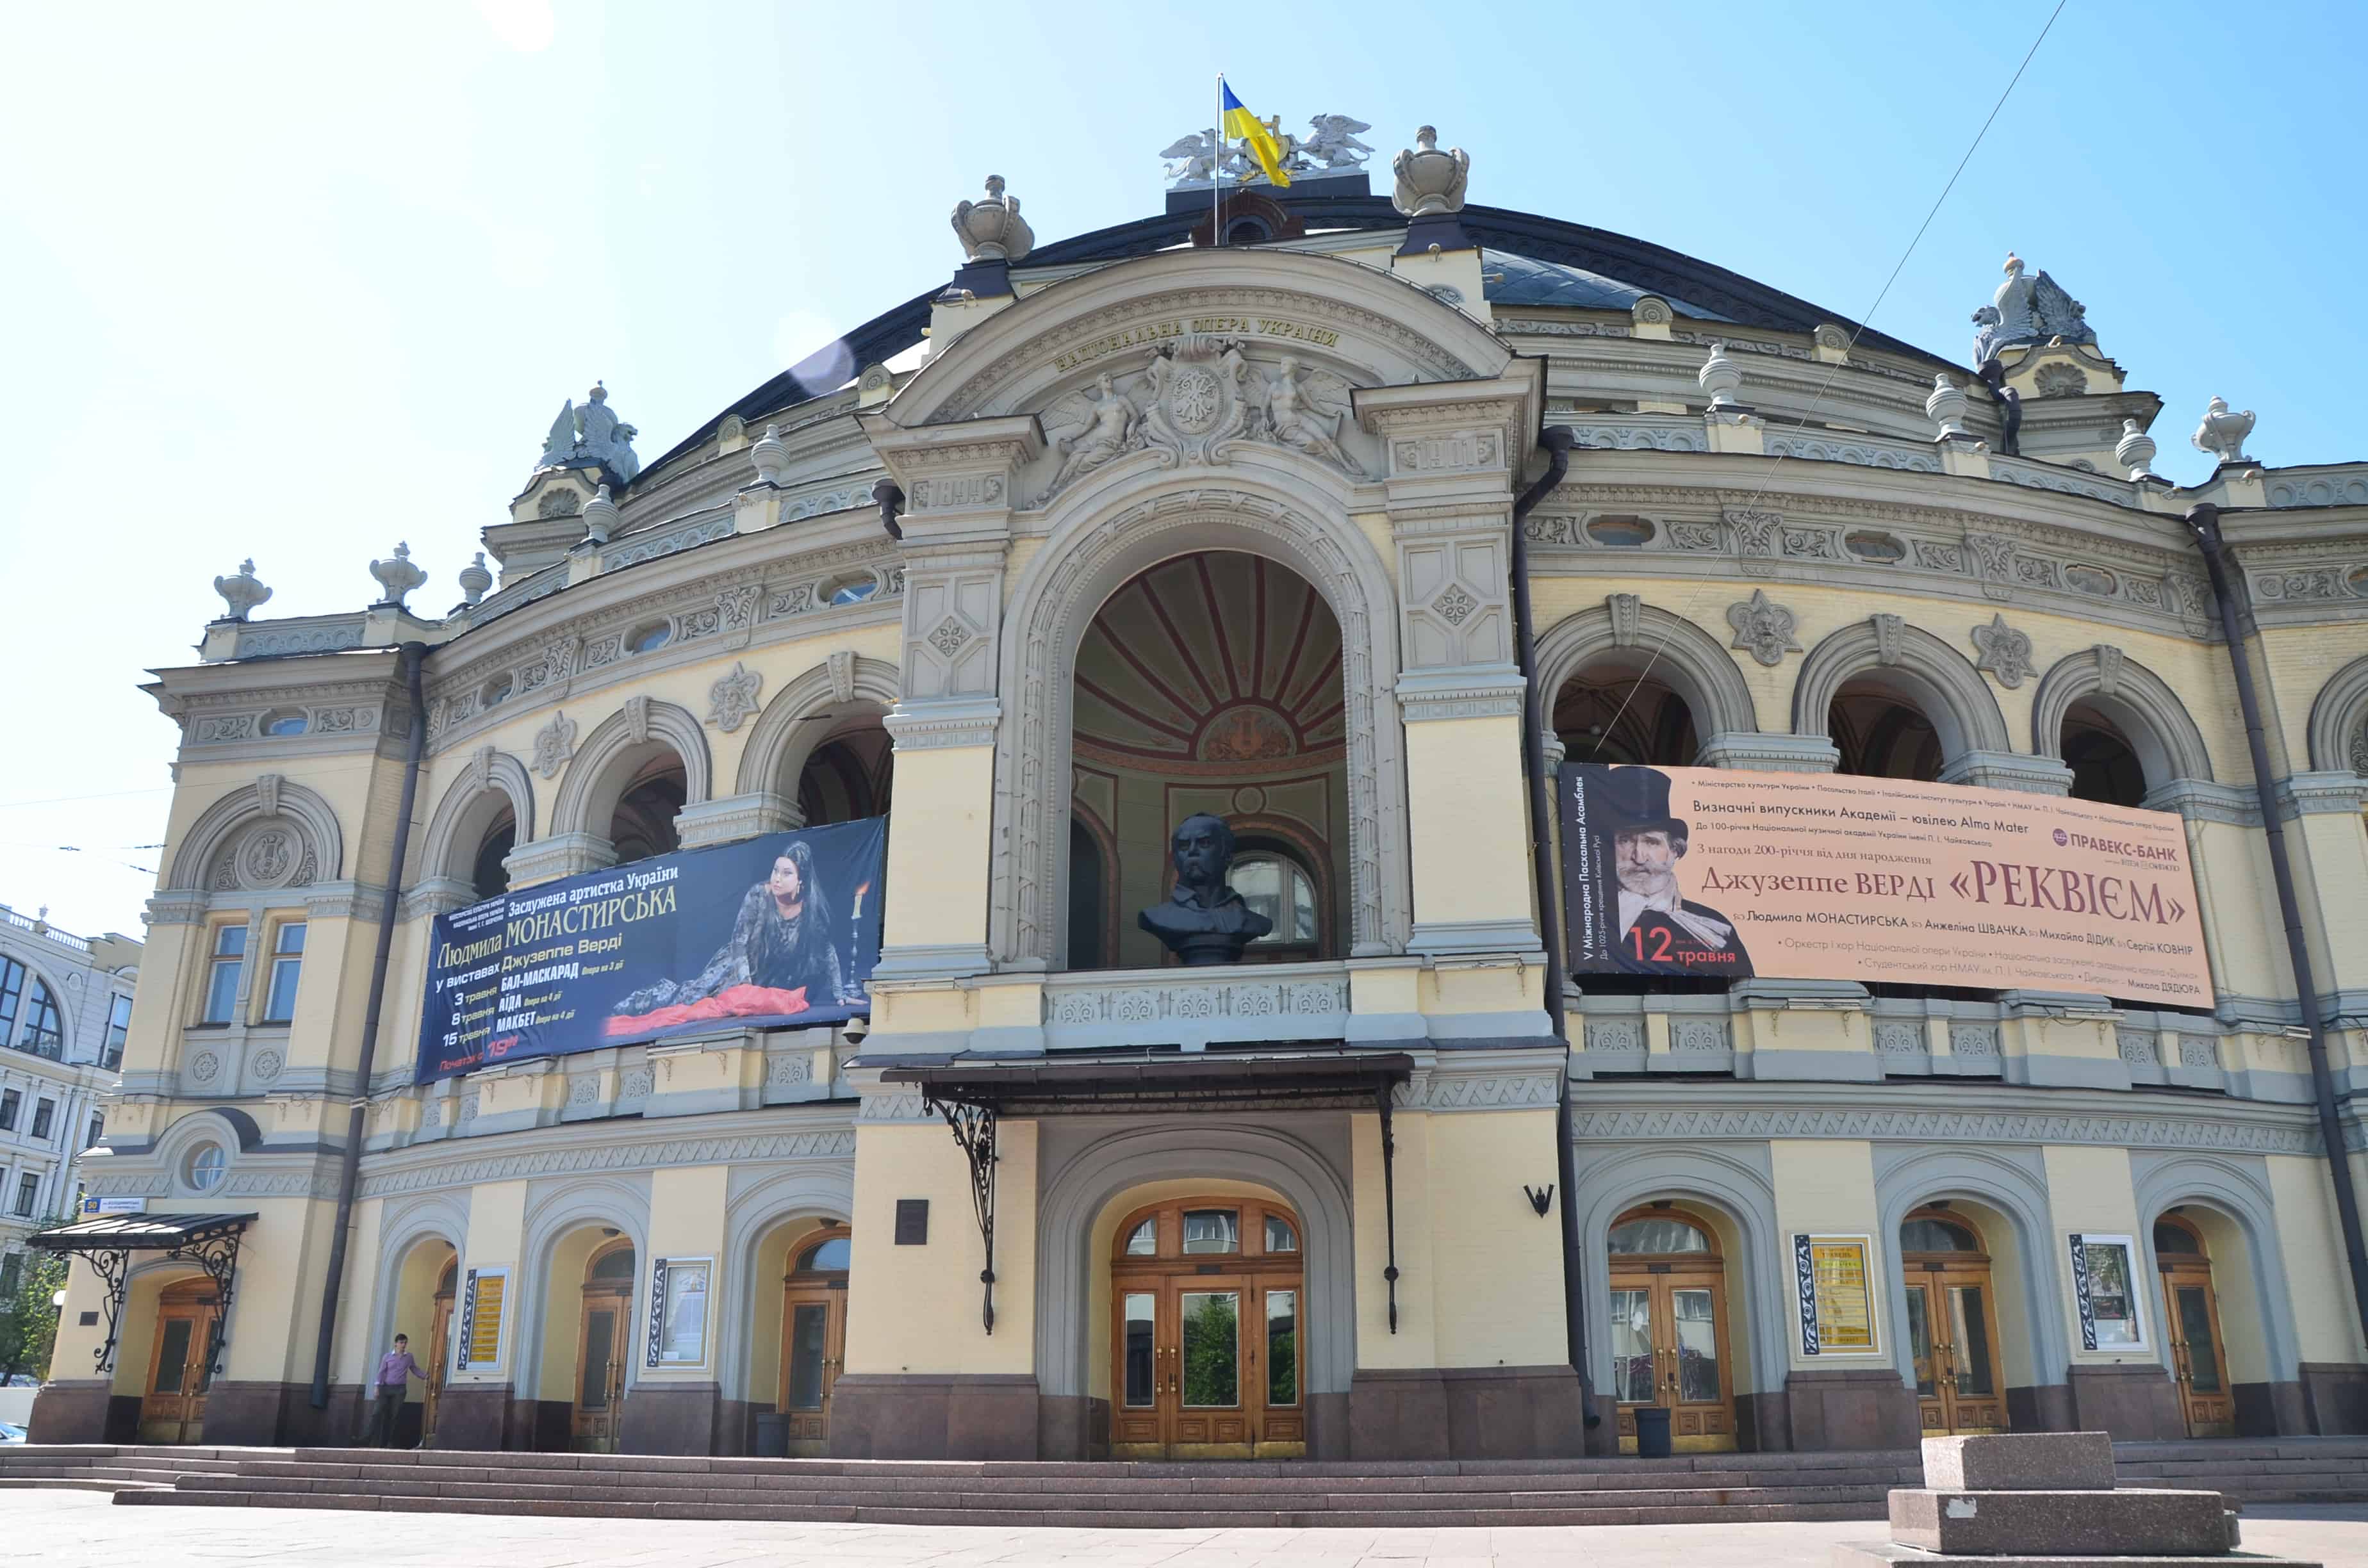 Ukrainian National Opera and Ballet Theatre in Kyiv, Ukraine